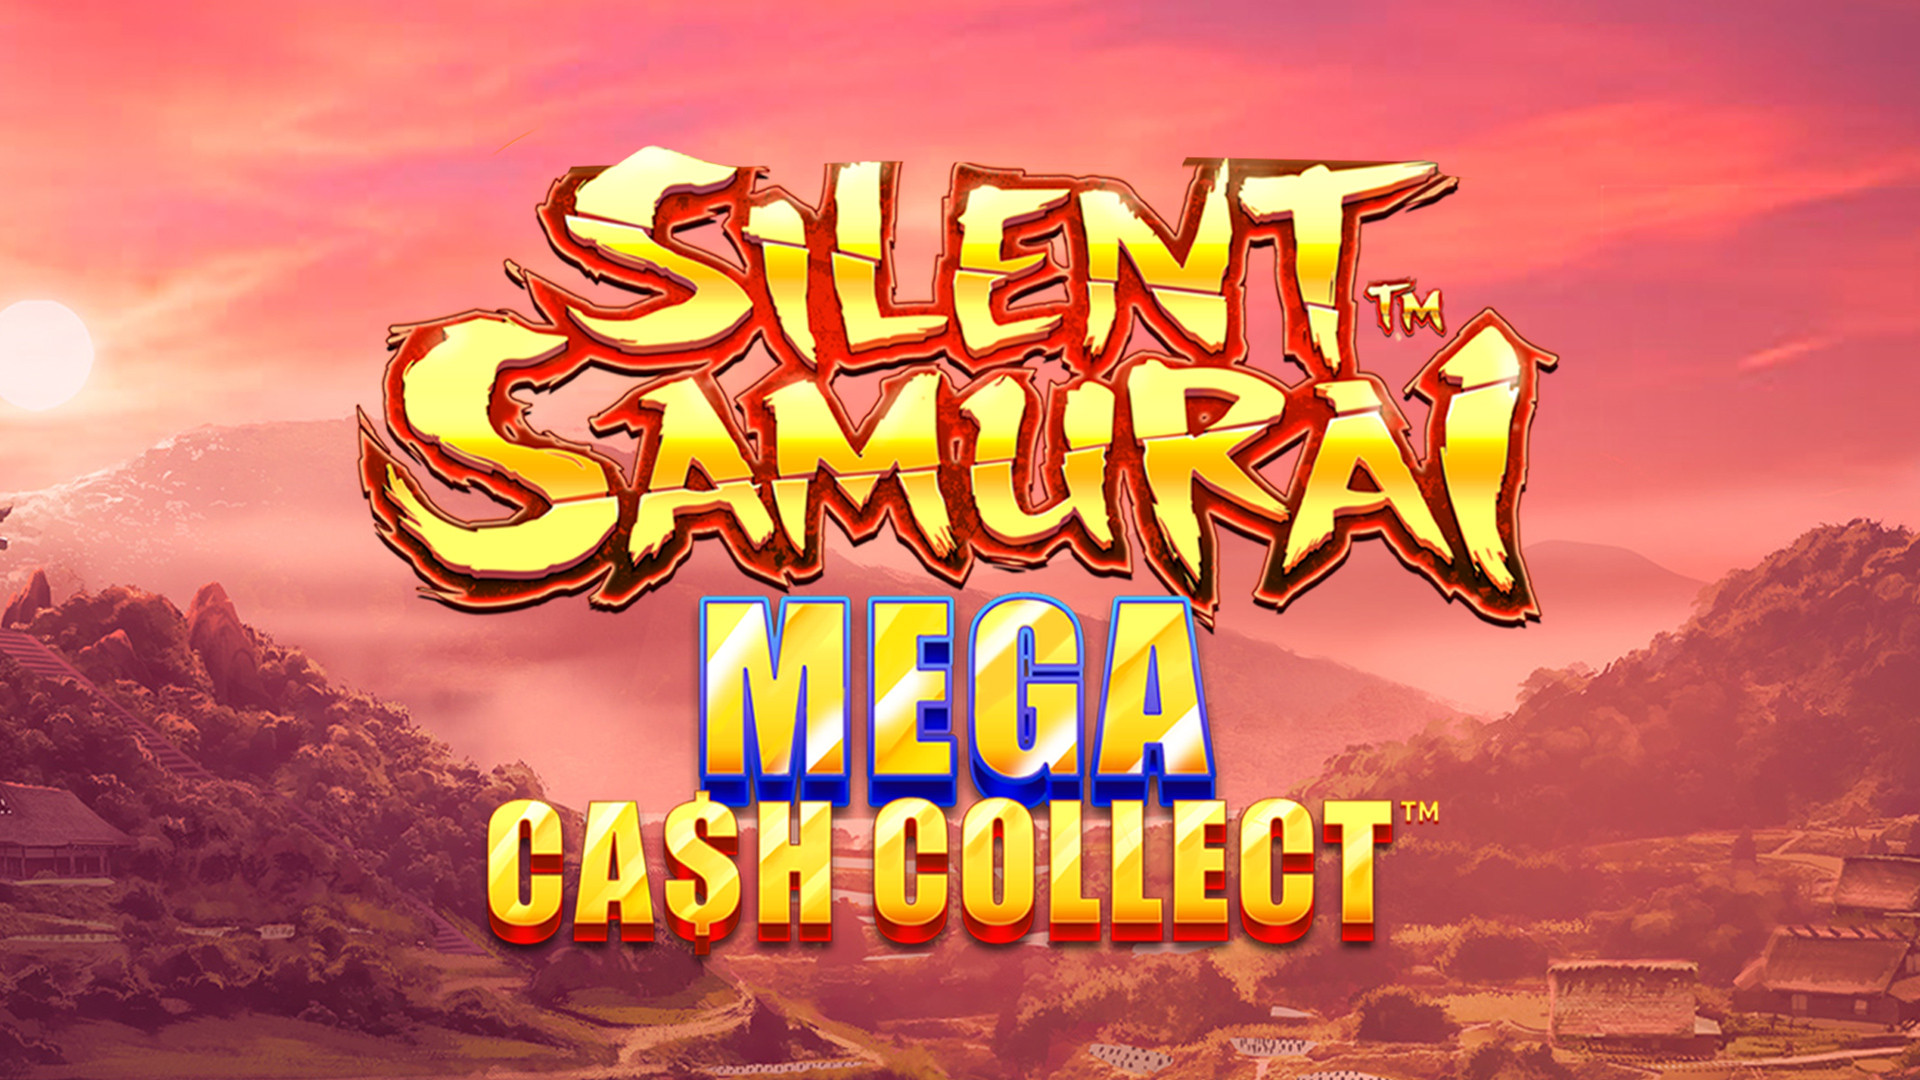 Silent Samurai Mega Cash Collect